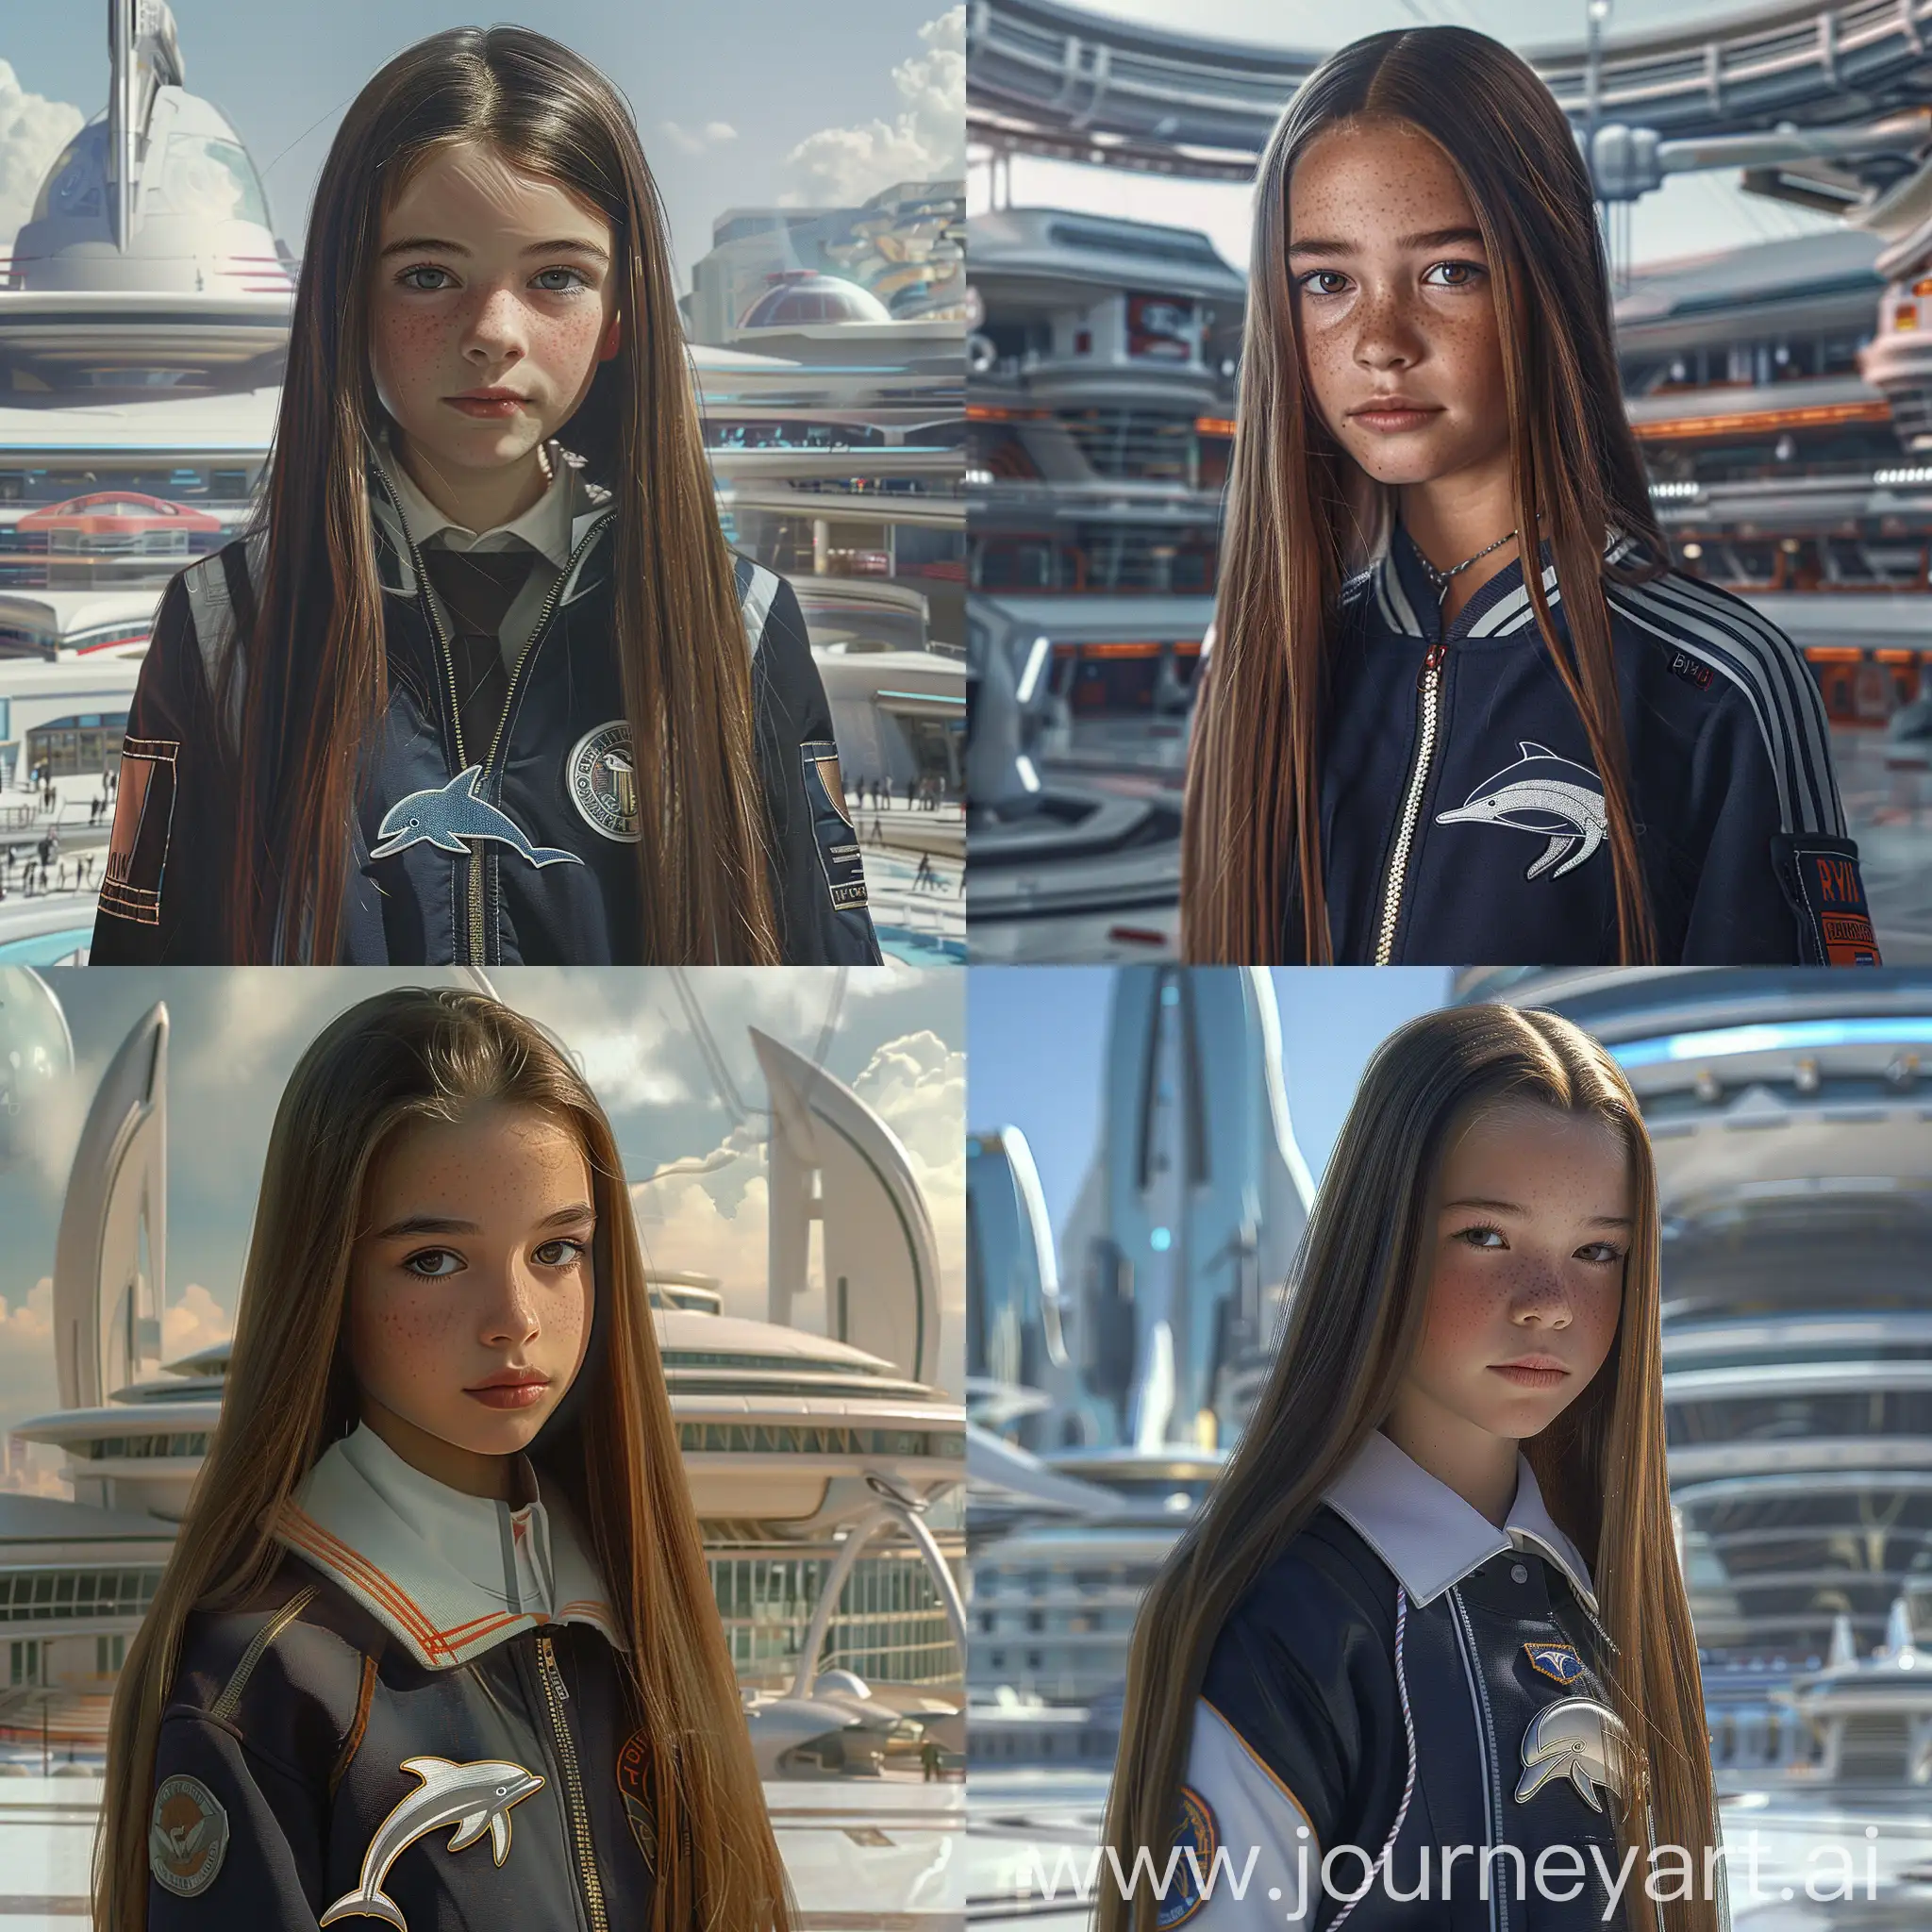 Teenage-Girl-in-DolphinEmblazoned-Jacket-at-Futuristic-School